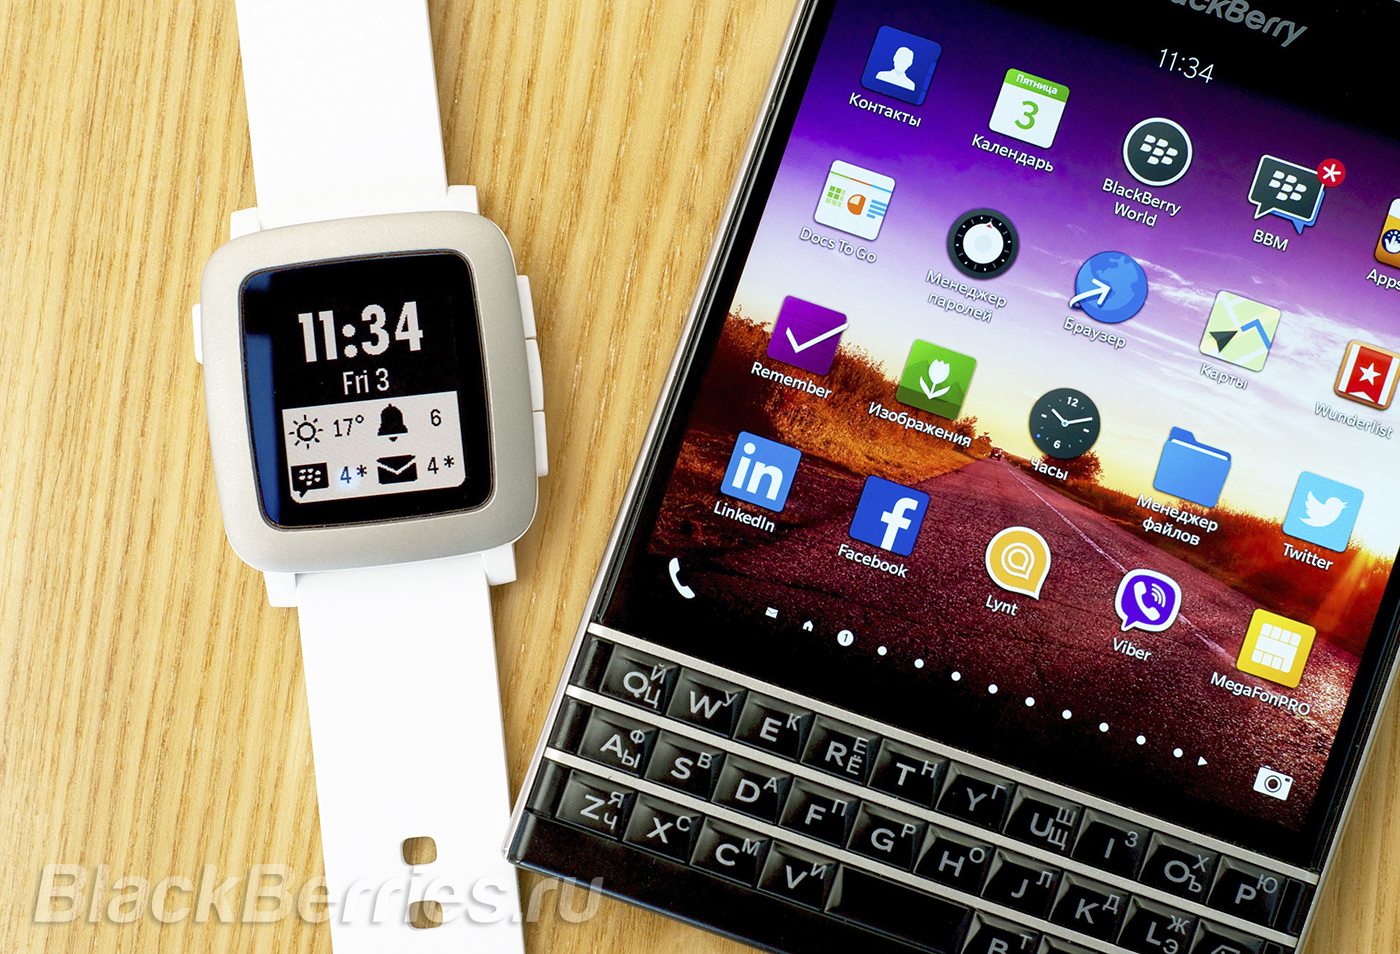 BlackBerry-Passport-Pebble-Time-54